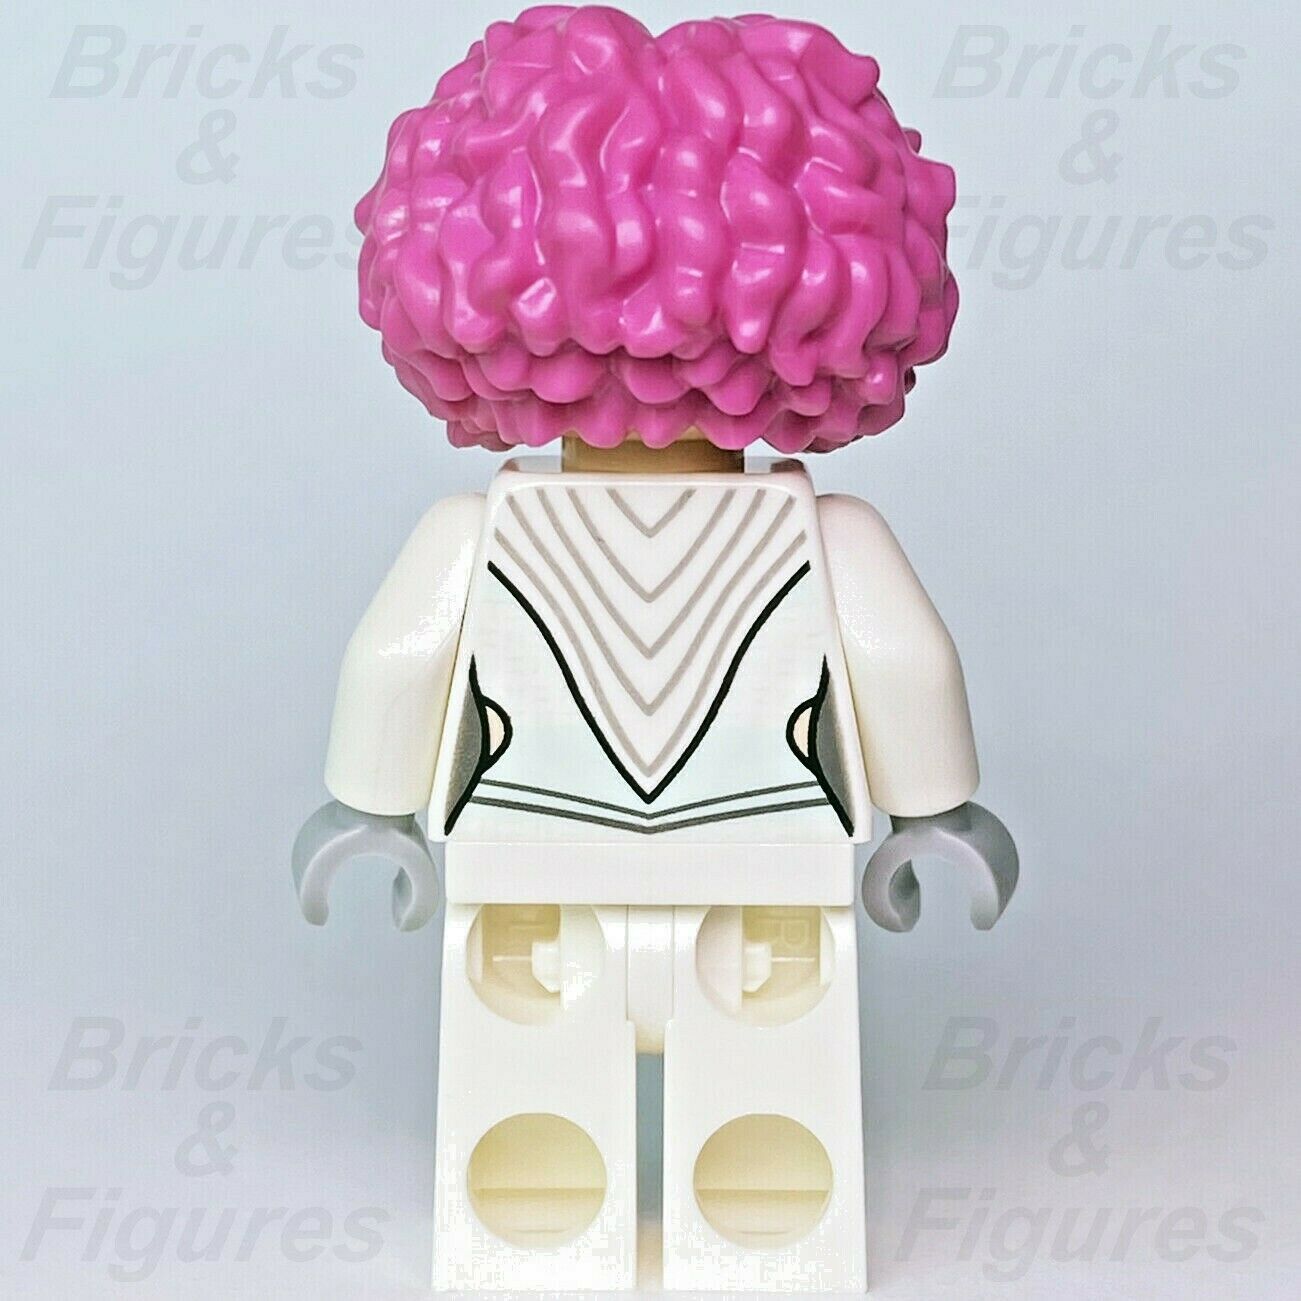 New Star Wars LEGO Theelin Dancer The Book of Boba Fett Minifigure 75326 sw1194 - Bricks & Figures